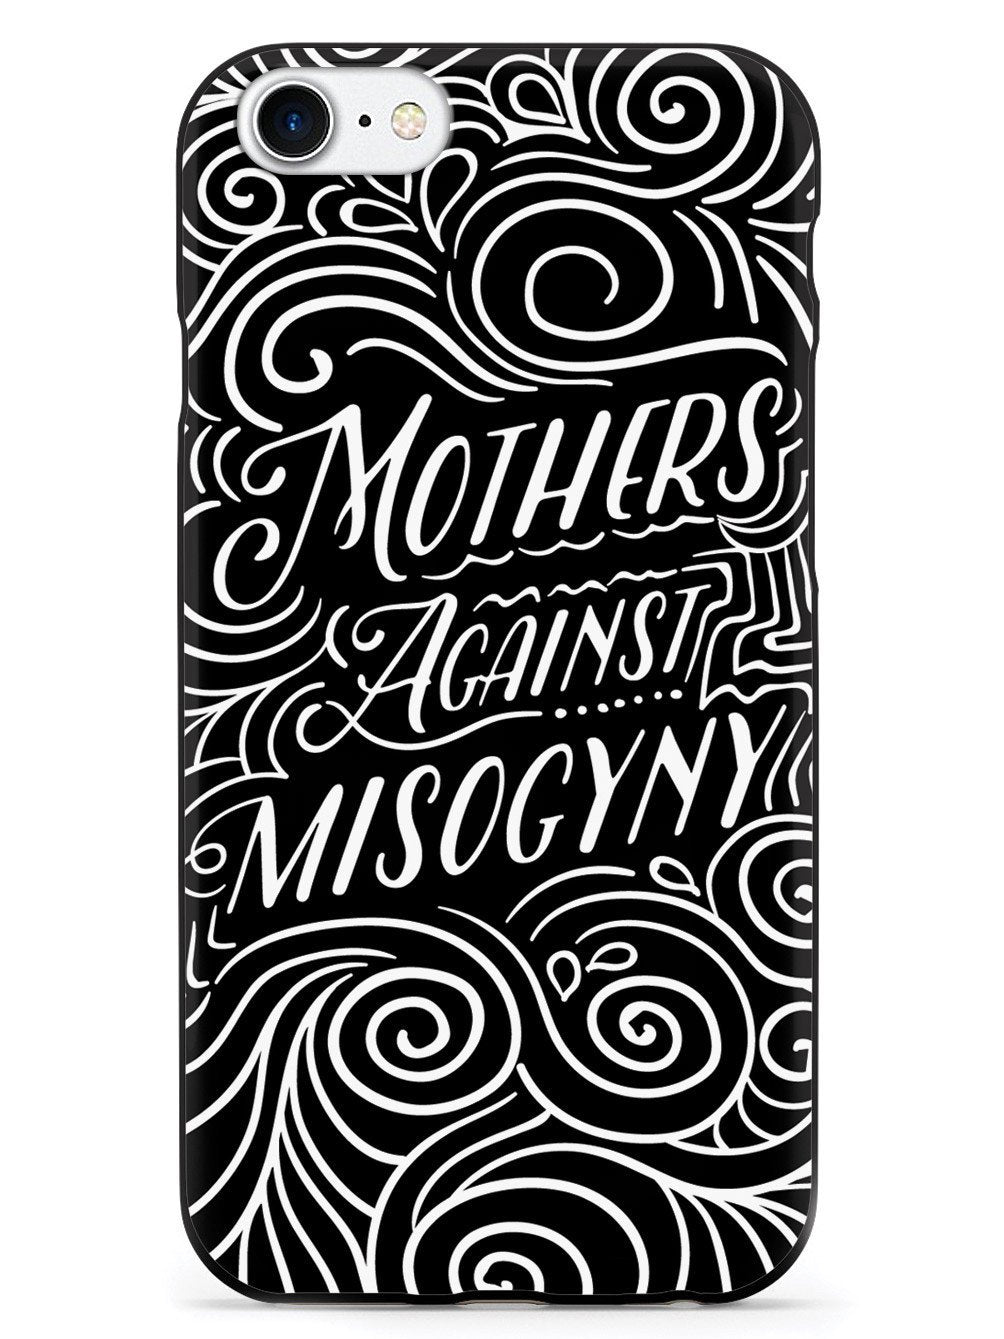 Mothers Against Misogyny - Black Case